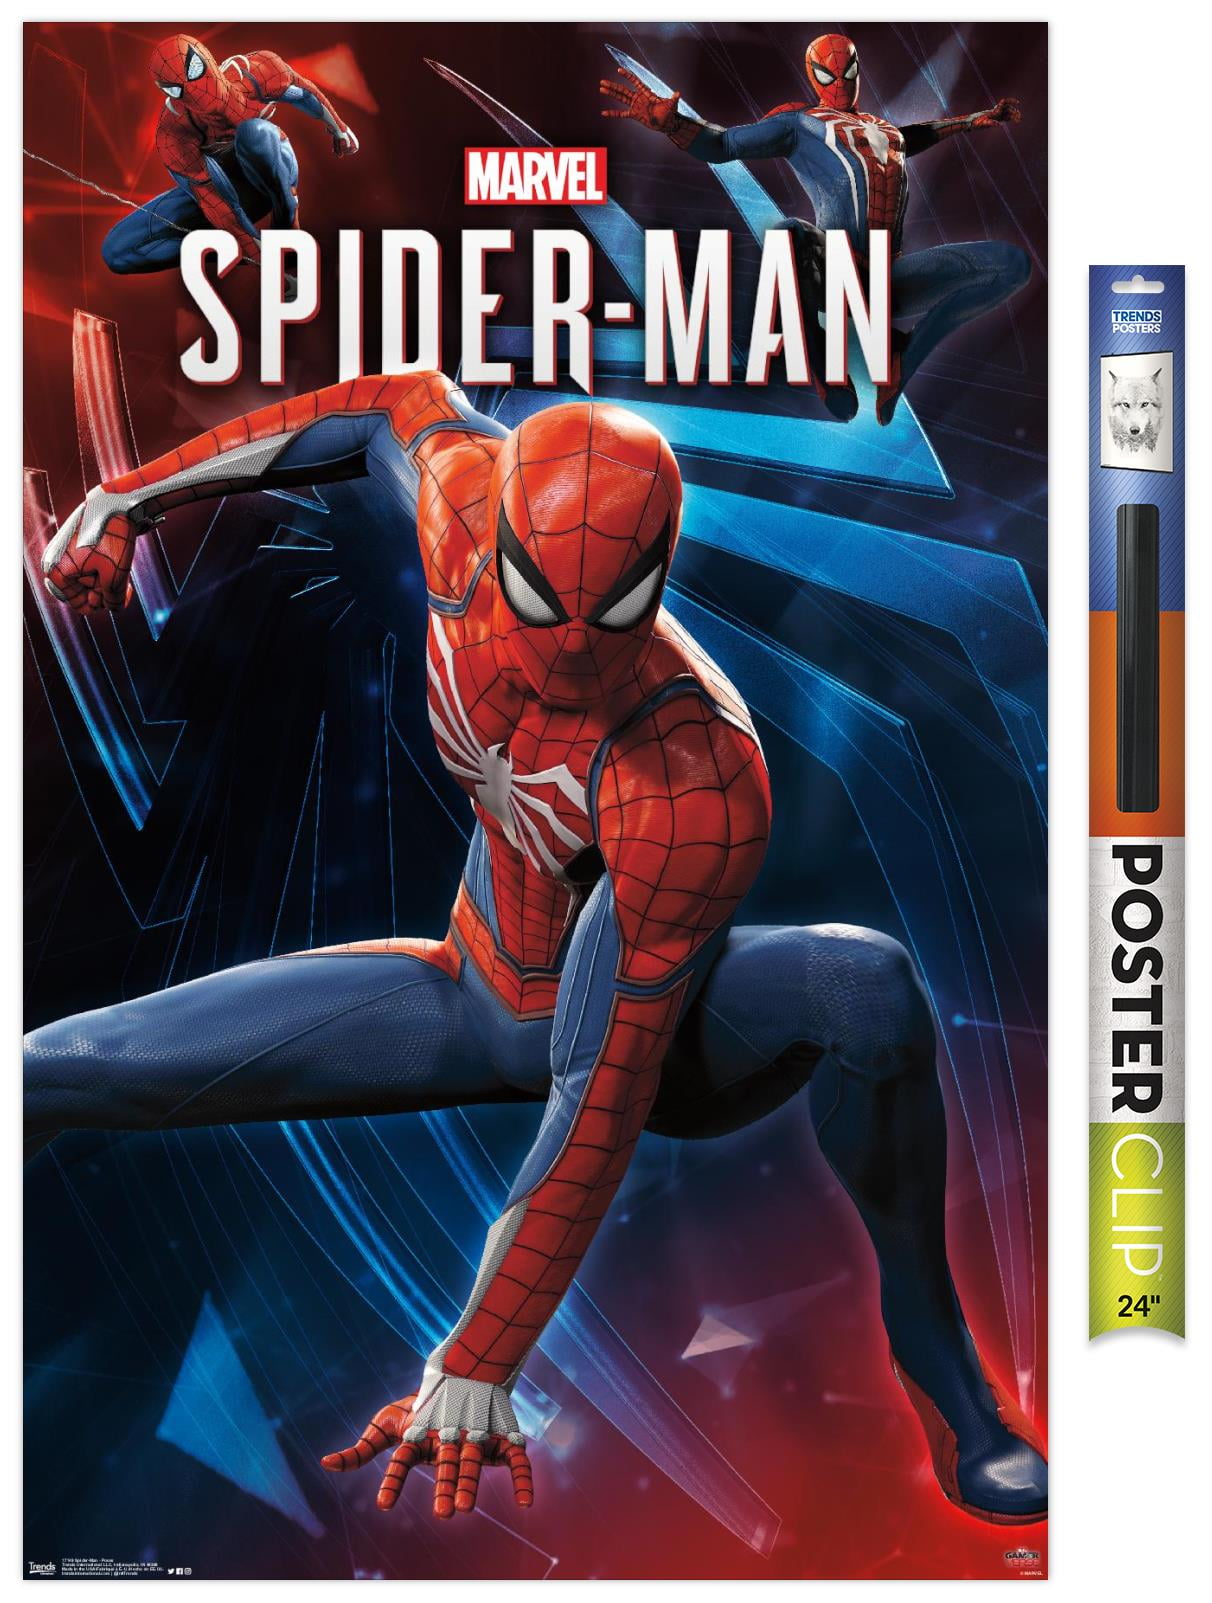 Marvel Comics - Spider-Man - Poses Wall Poster, 22.375